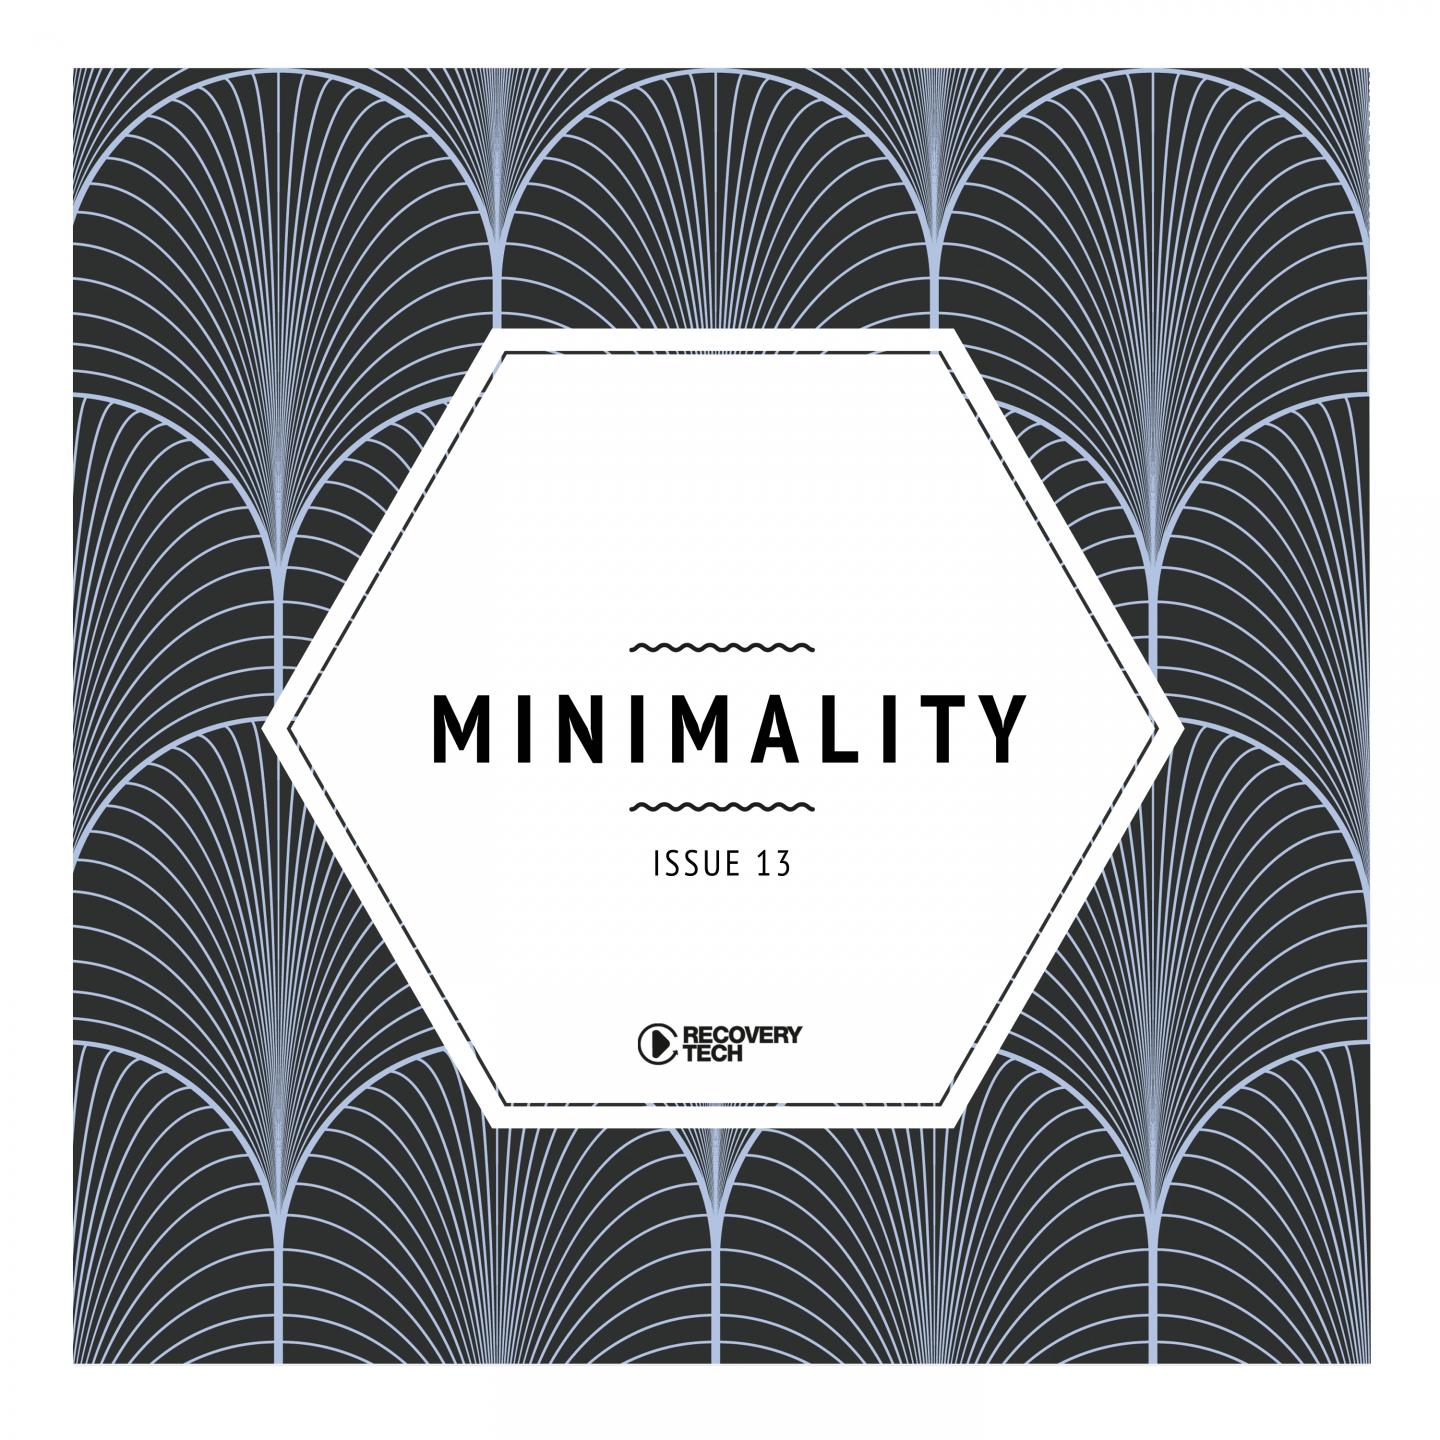 Minimality Issue 13